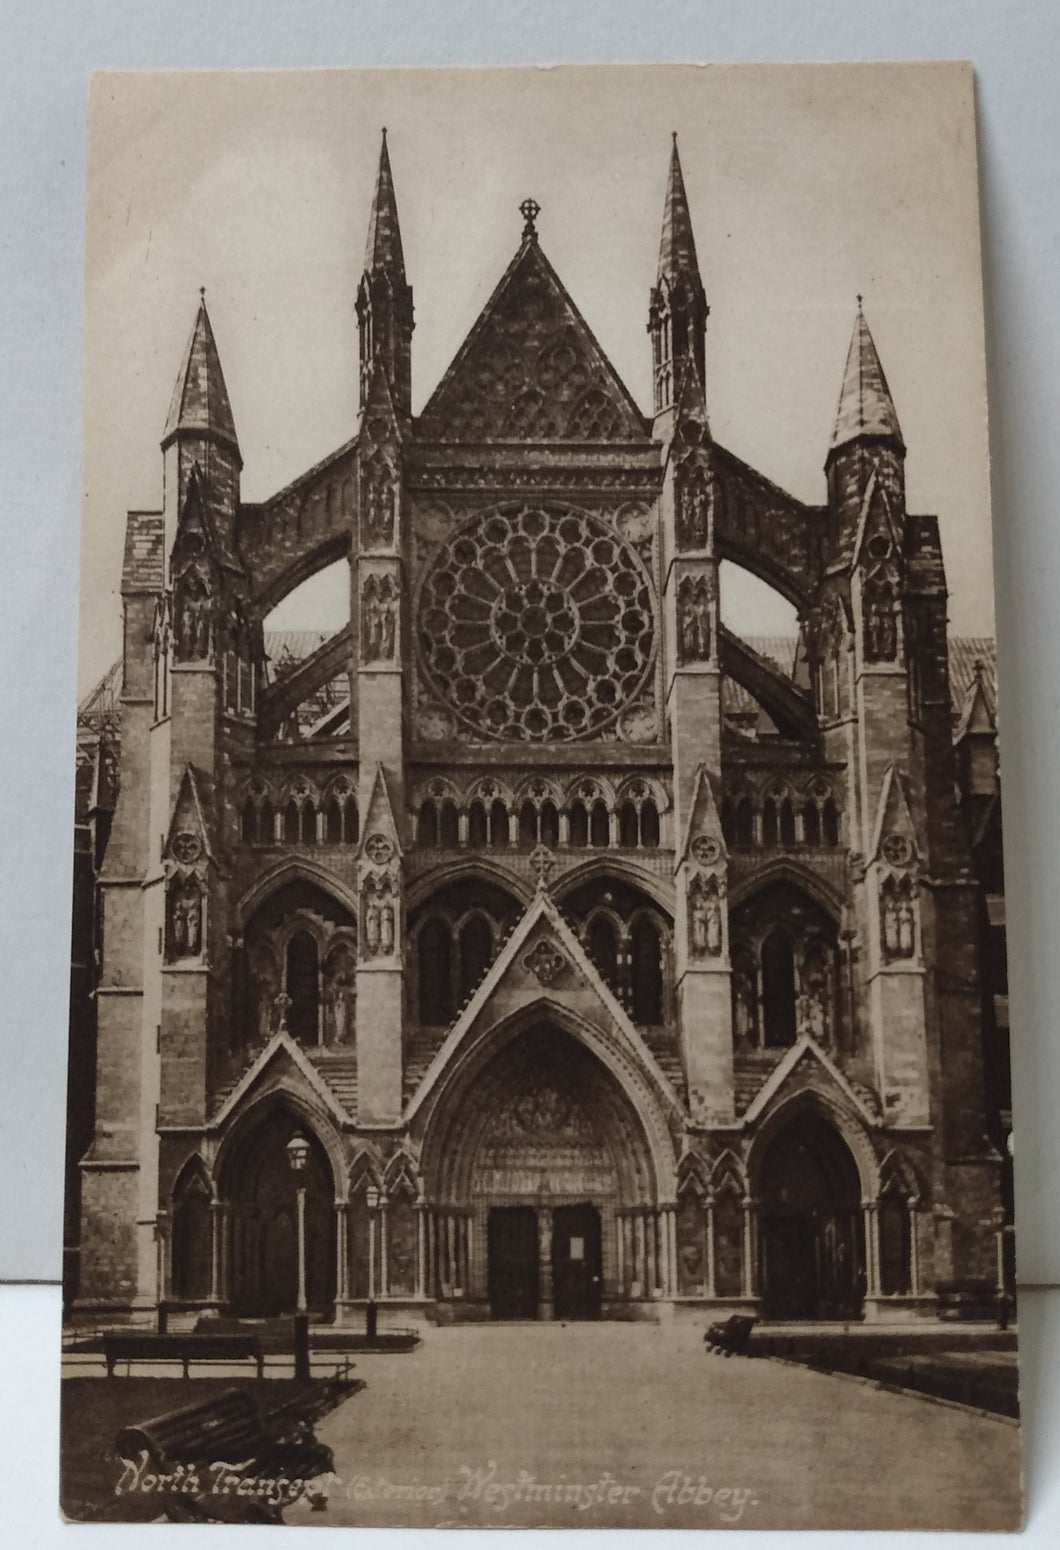 North Transept Westminster Abbey London Postcard 1900's Valentine's Gravure - TulipStuff